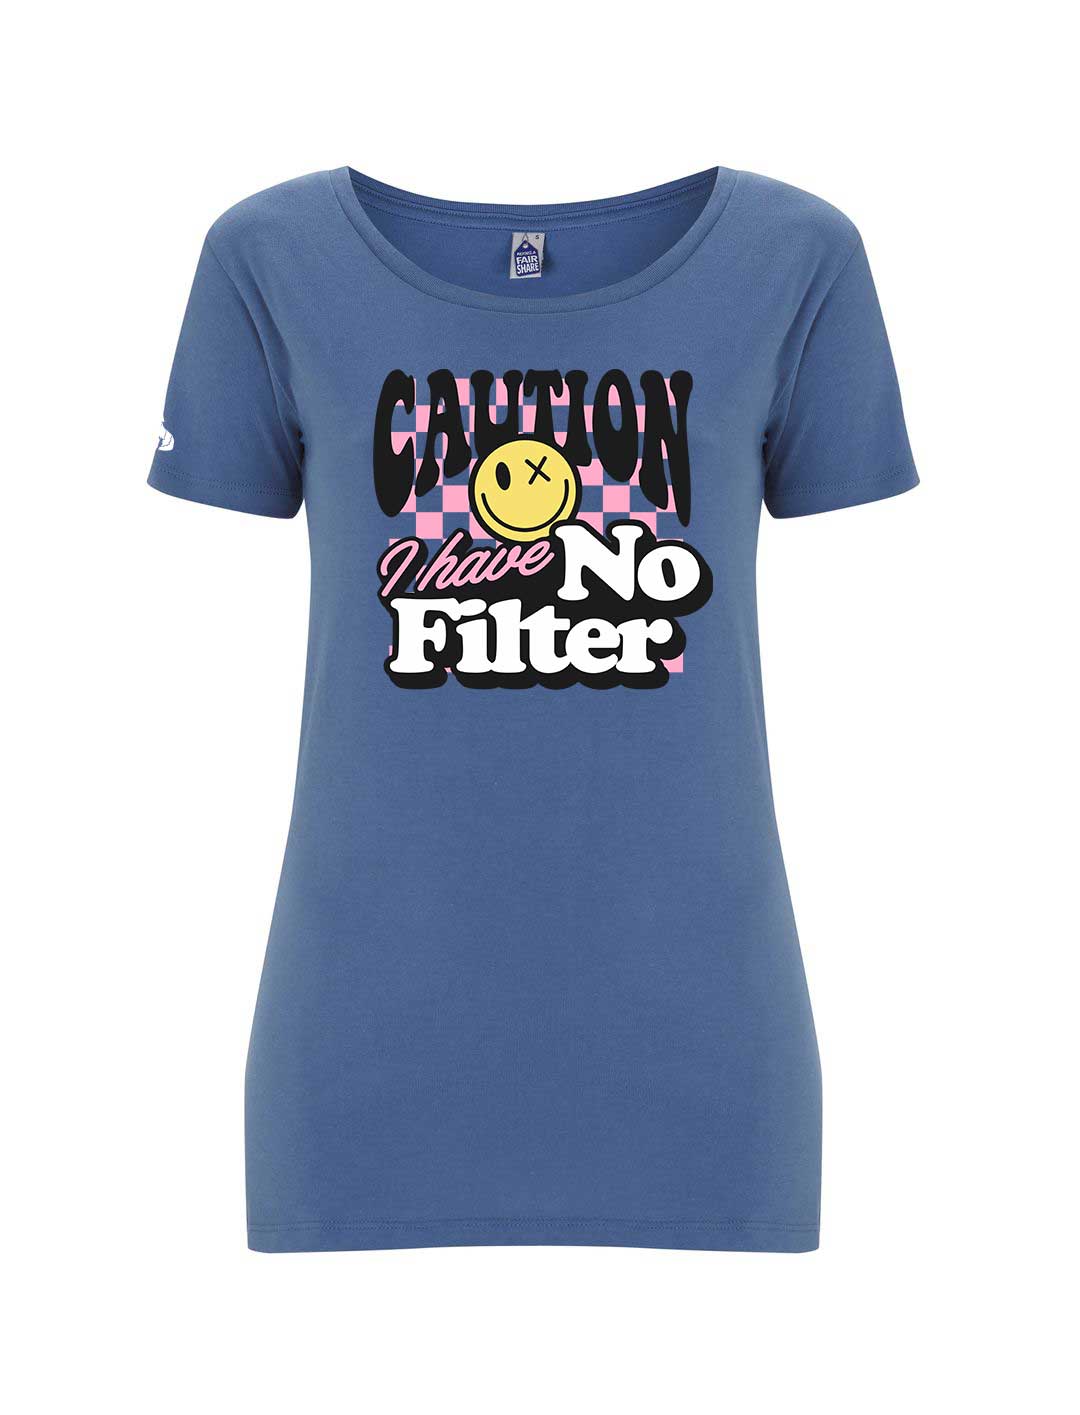 Women's Fairtrade Caution I have No Filter T-shirt